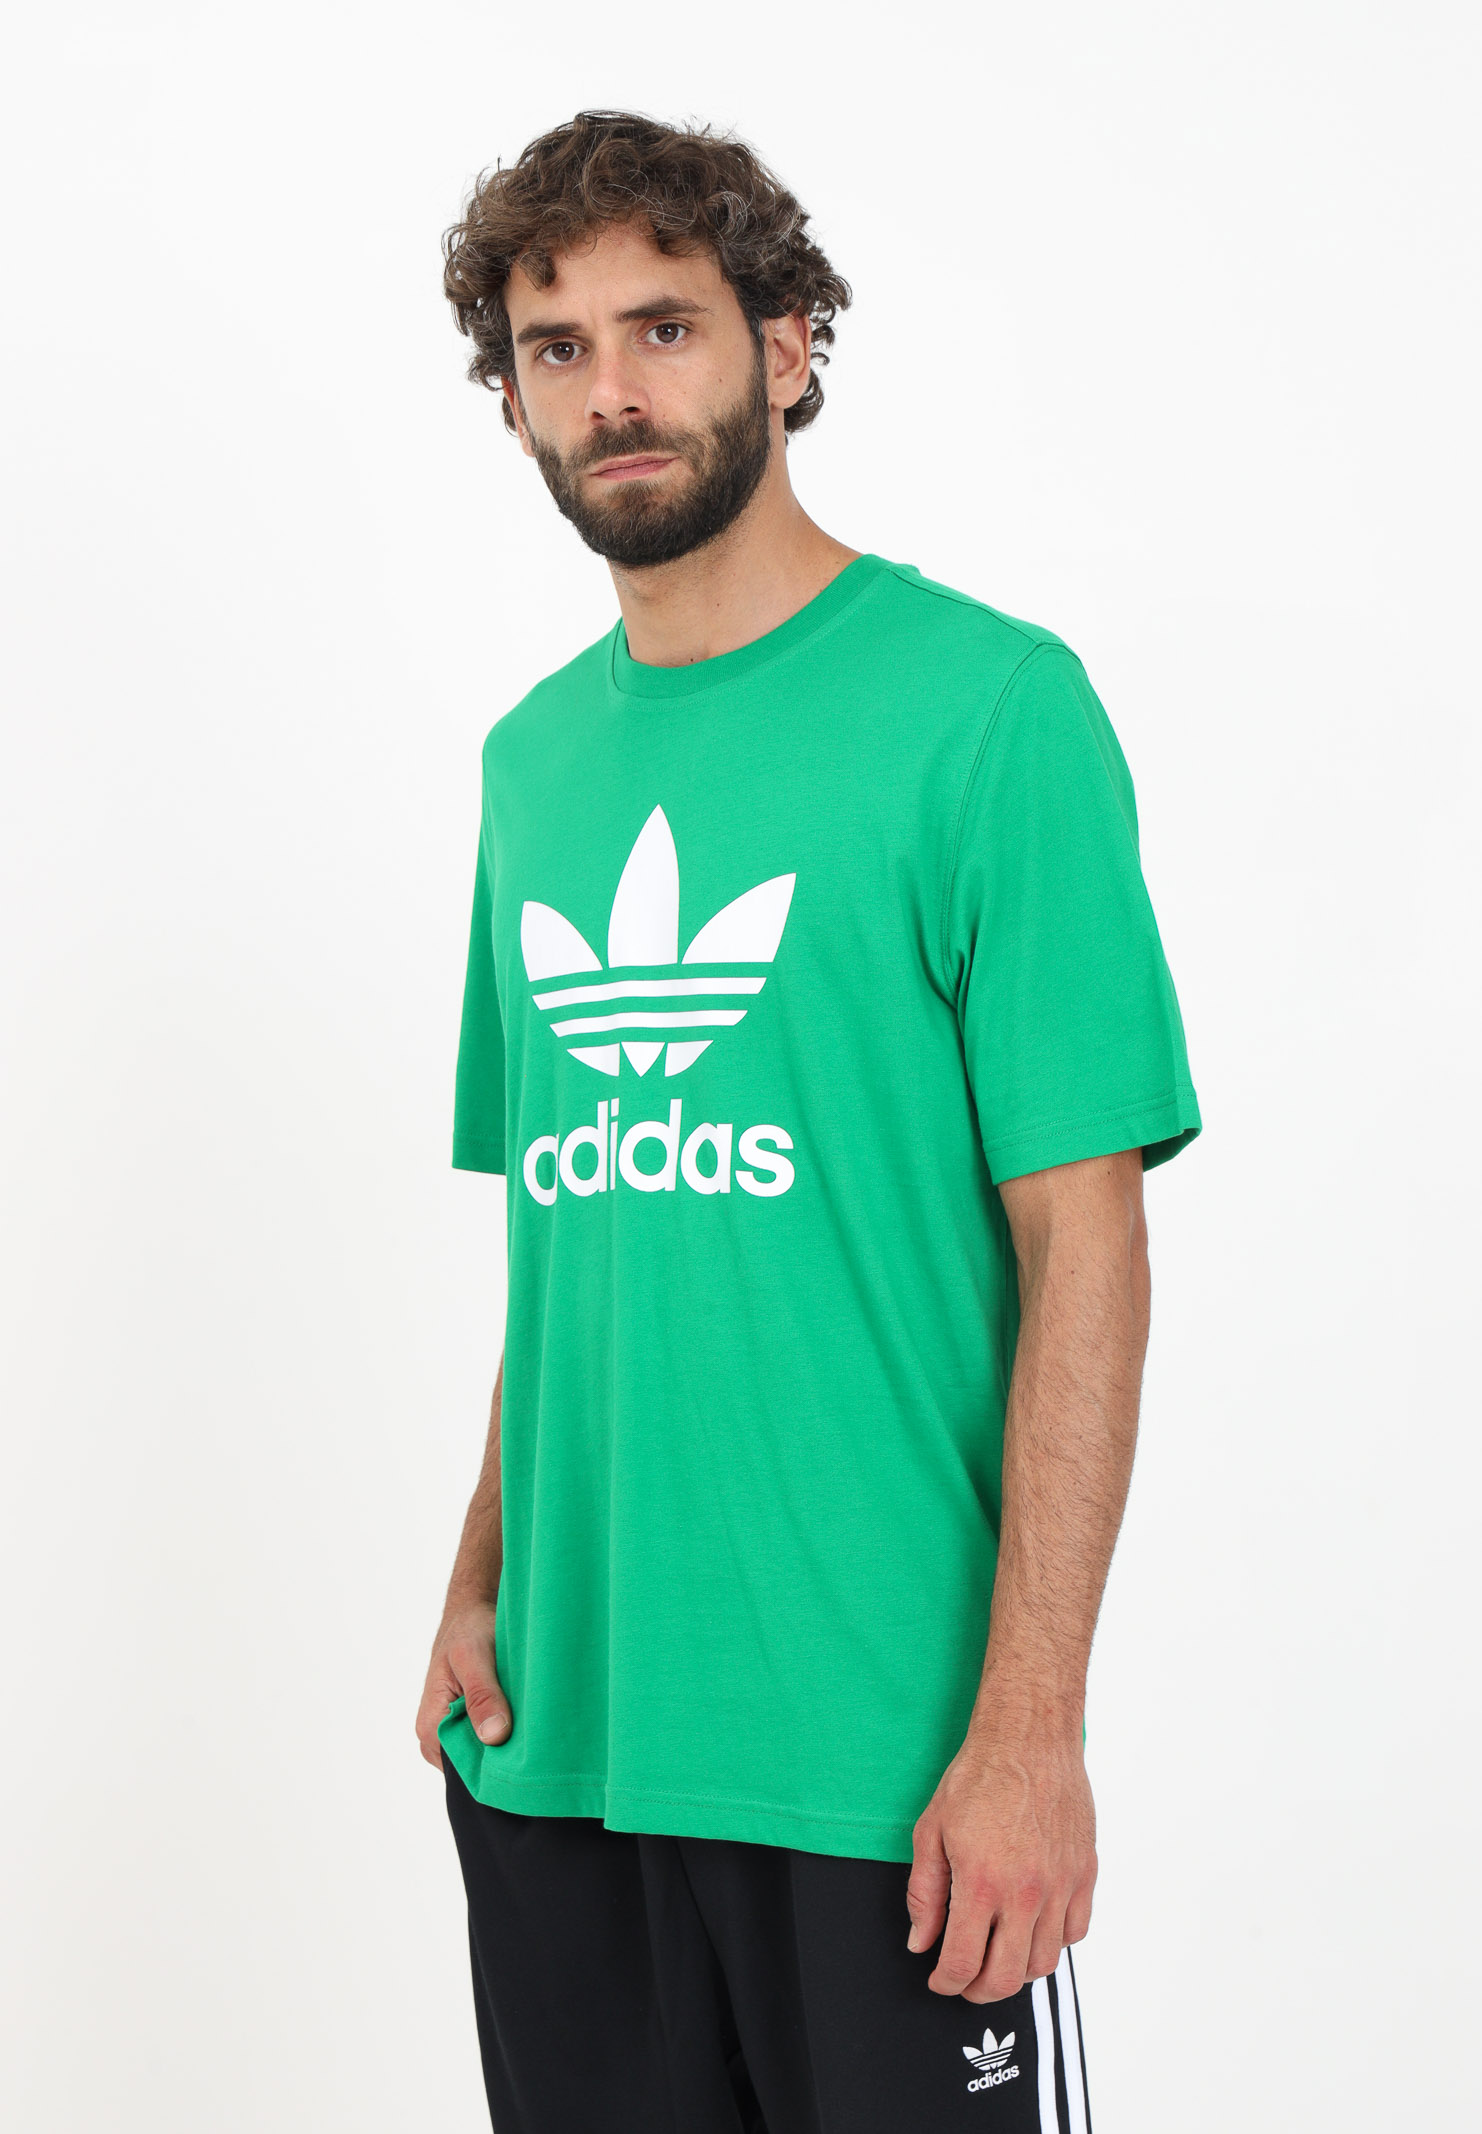 Adicolor Classics Trefoil green men's t-shirt - ADIDAS ORIGINALS - Pavidas